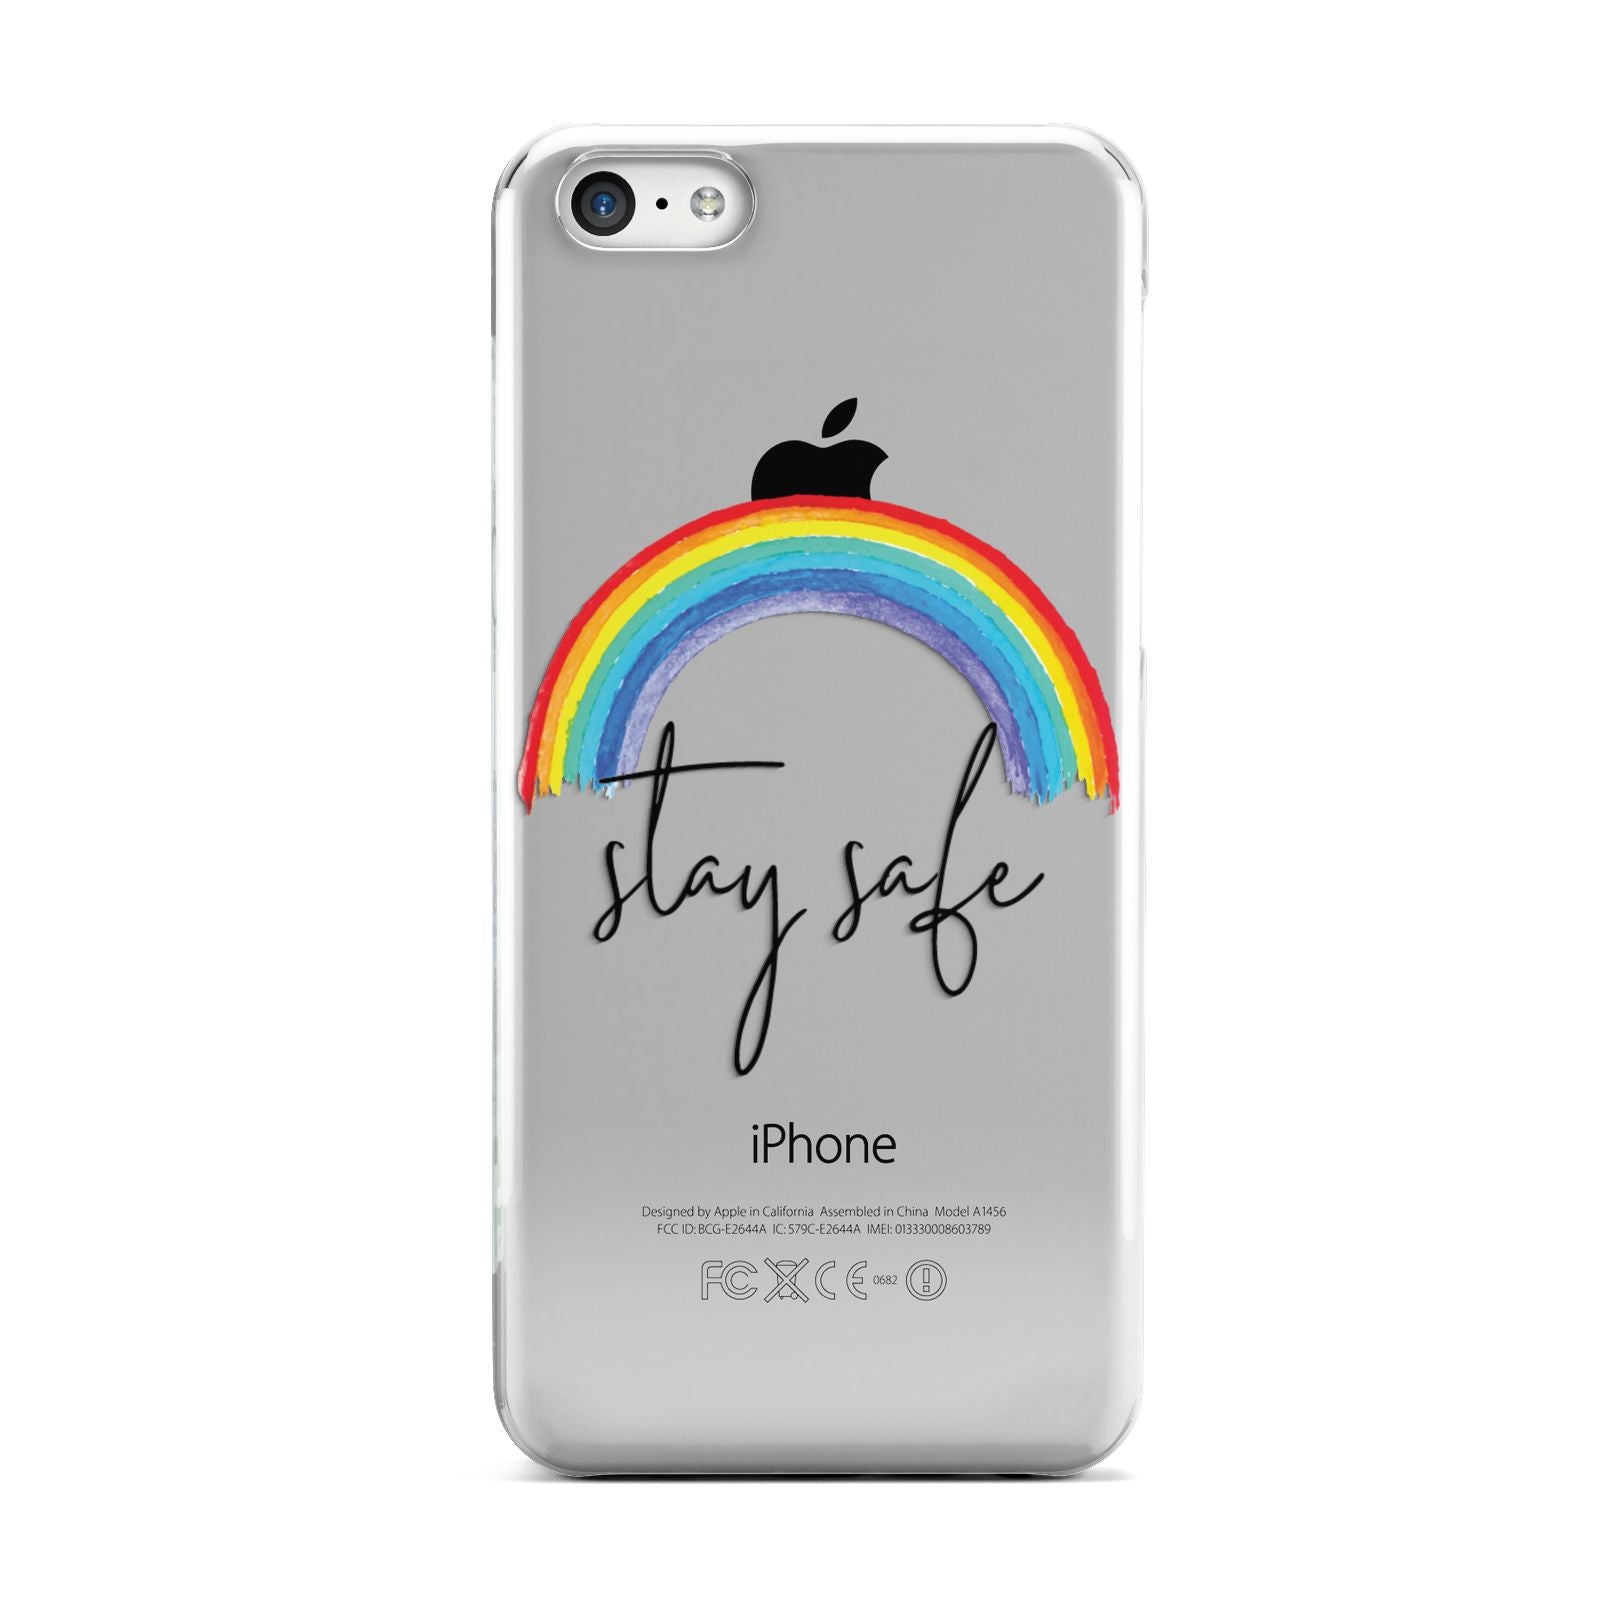 Stay Safe Rainbow Apple iPhone 5c Case